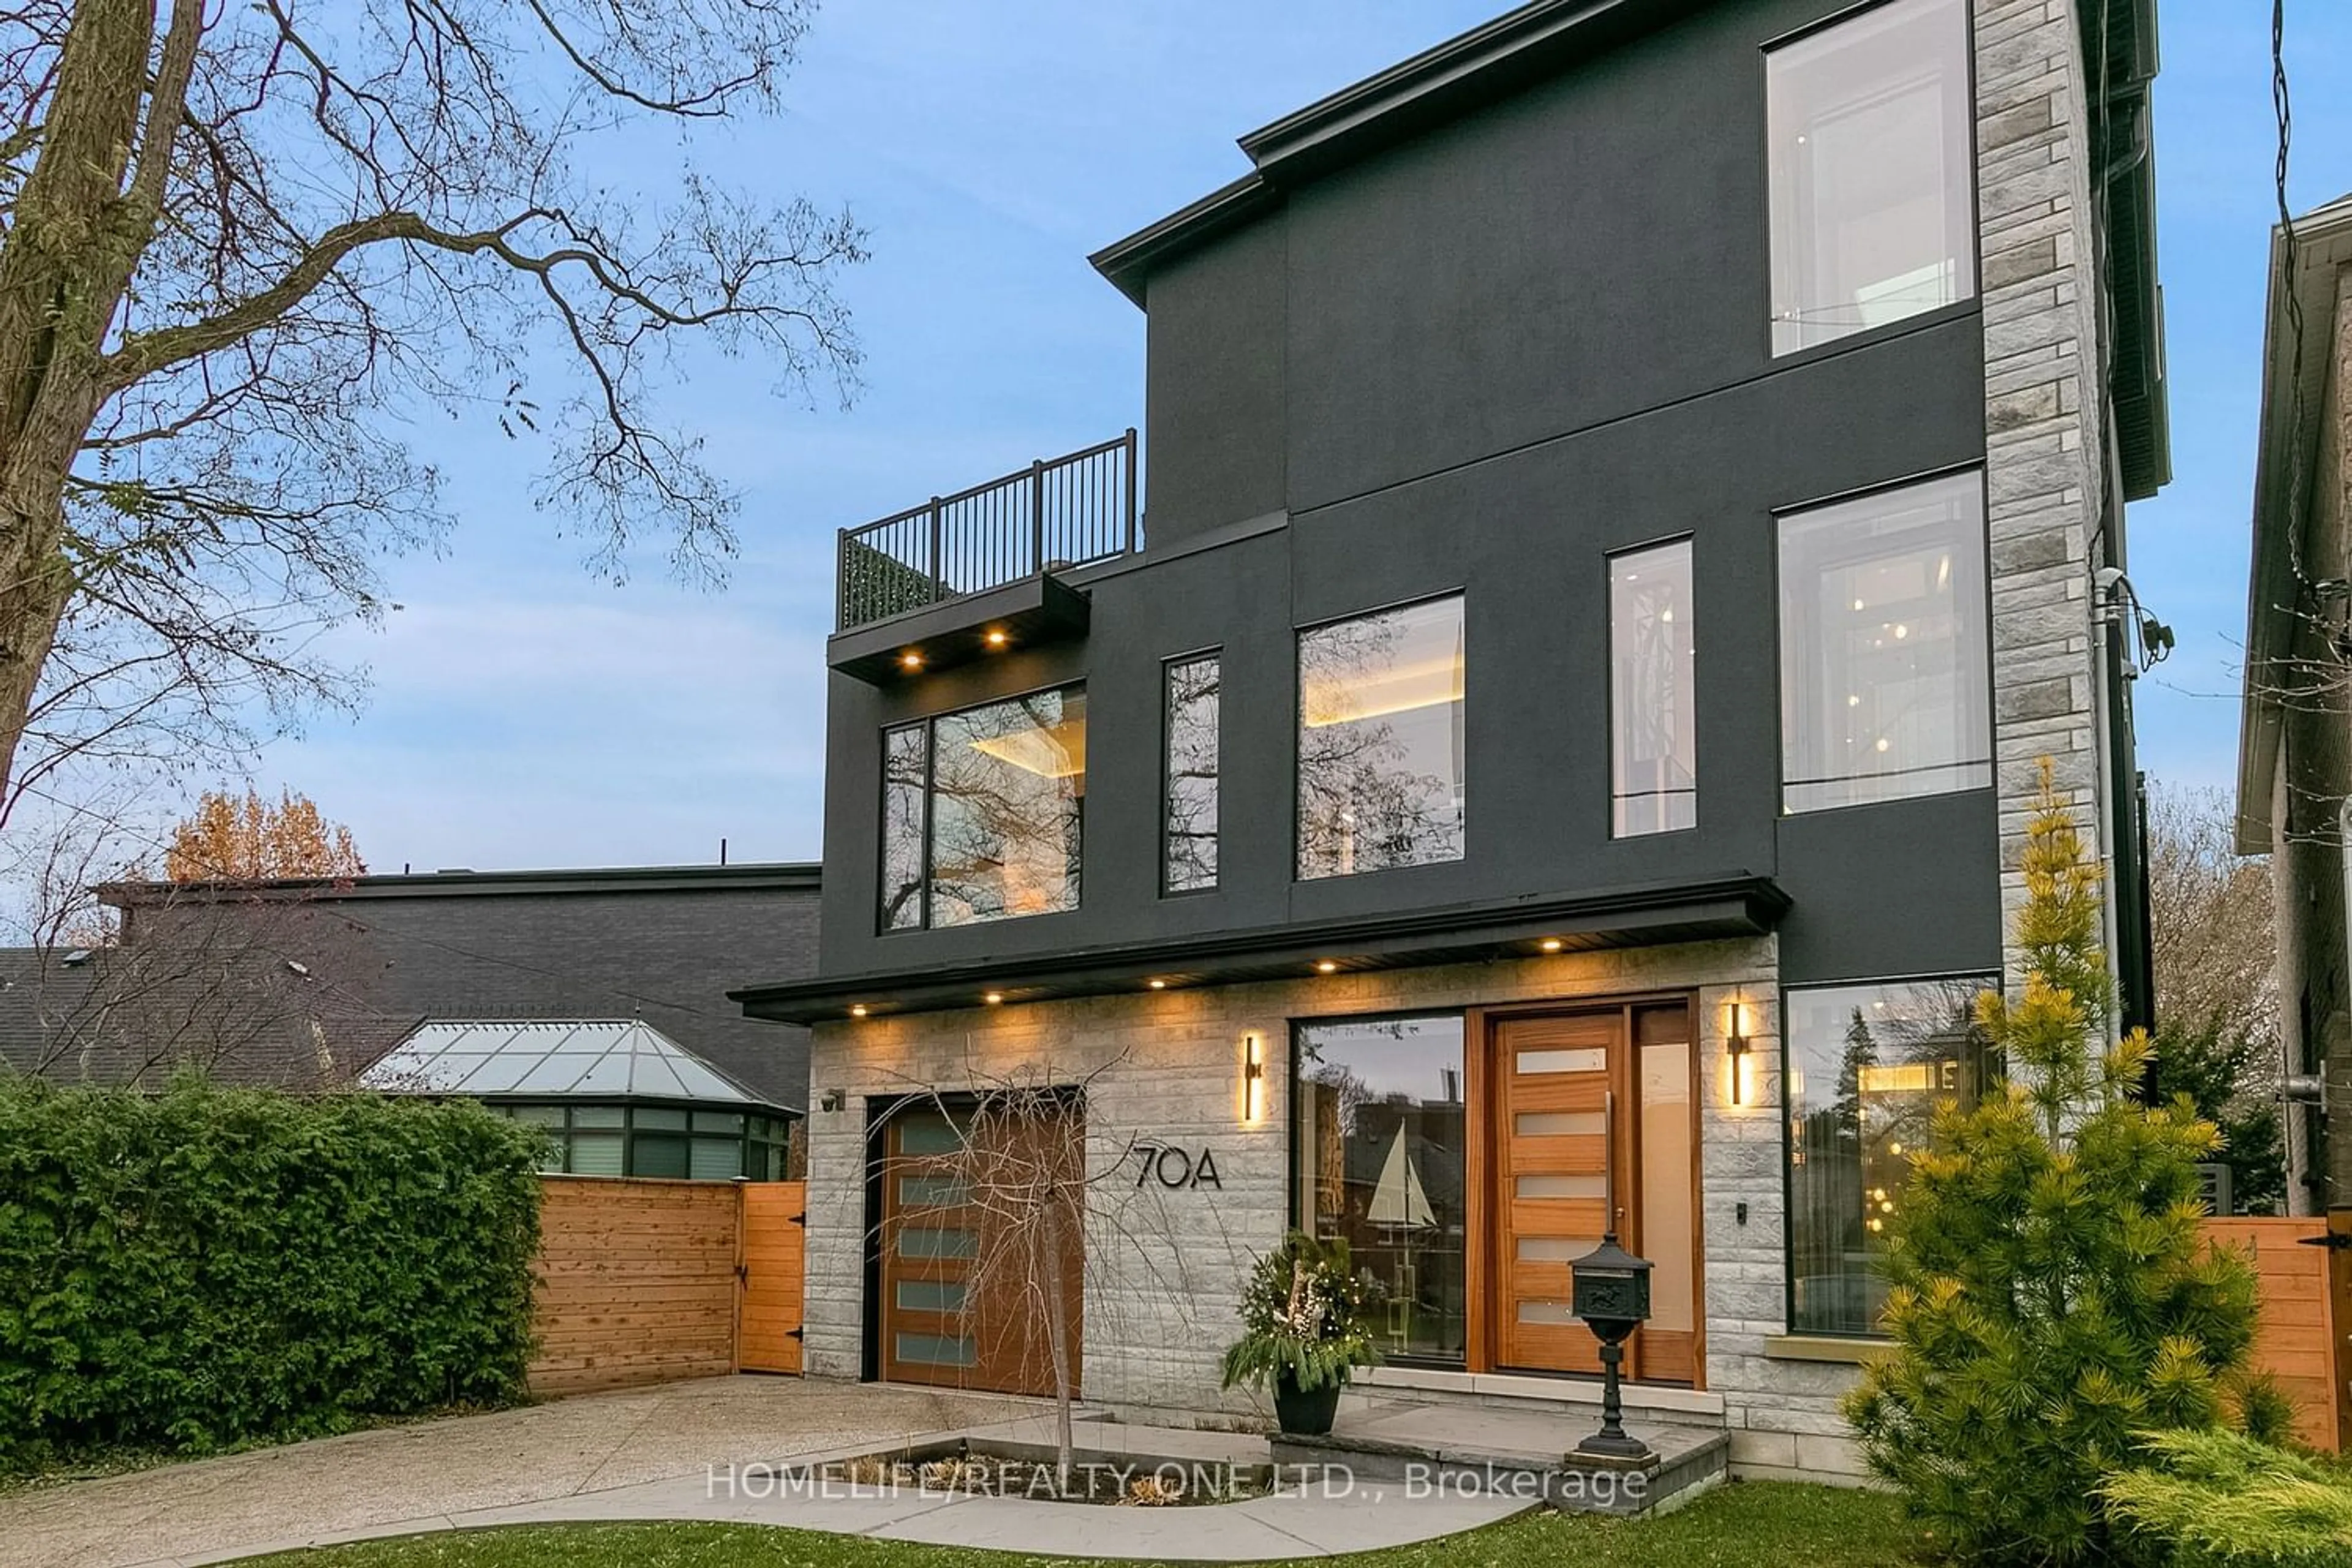 Home with stucco exterior material for 70A Hillside Dr, Toronto Ontario M4K 2M6